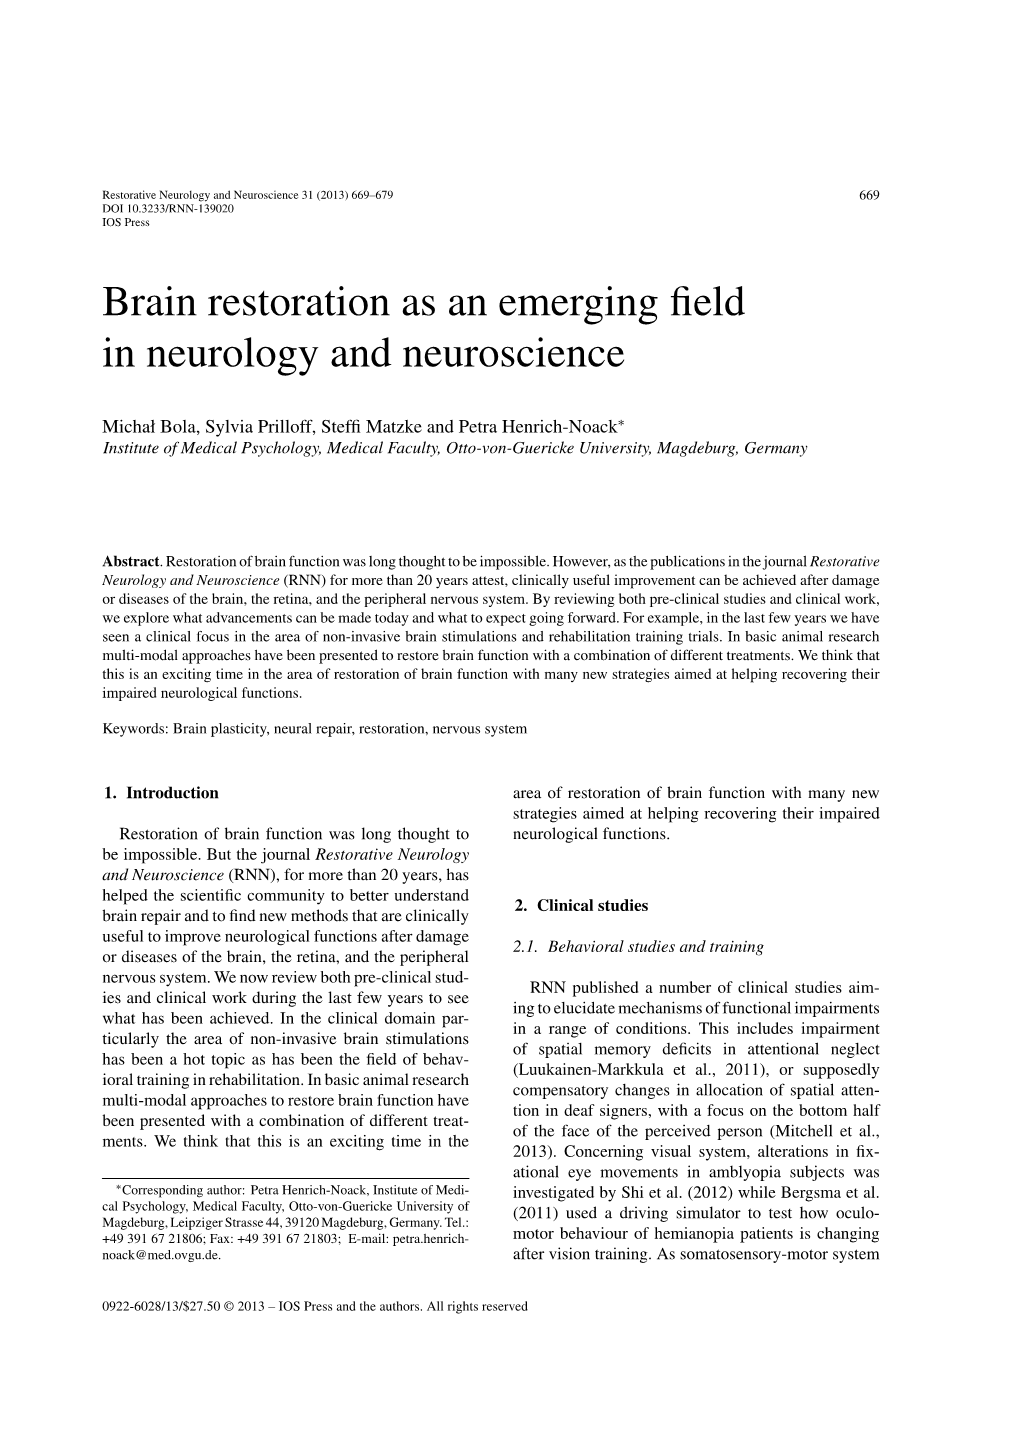 Brain Restoration As an Emerging Field in Neurology and Neuroscience